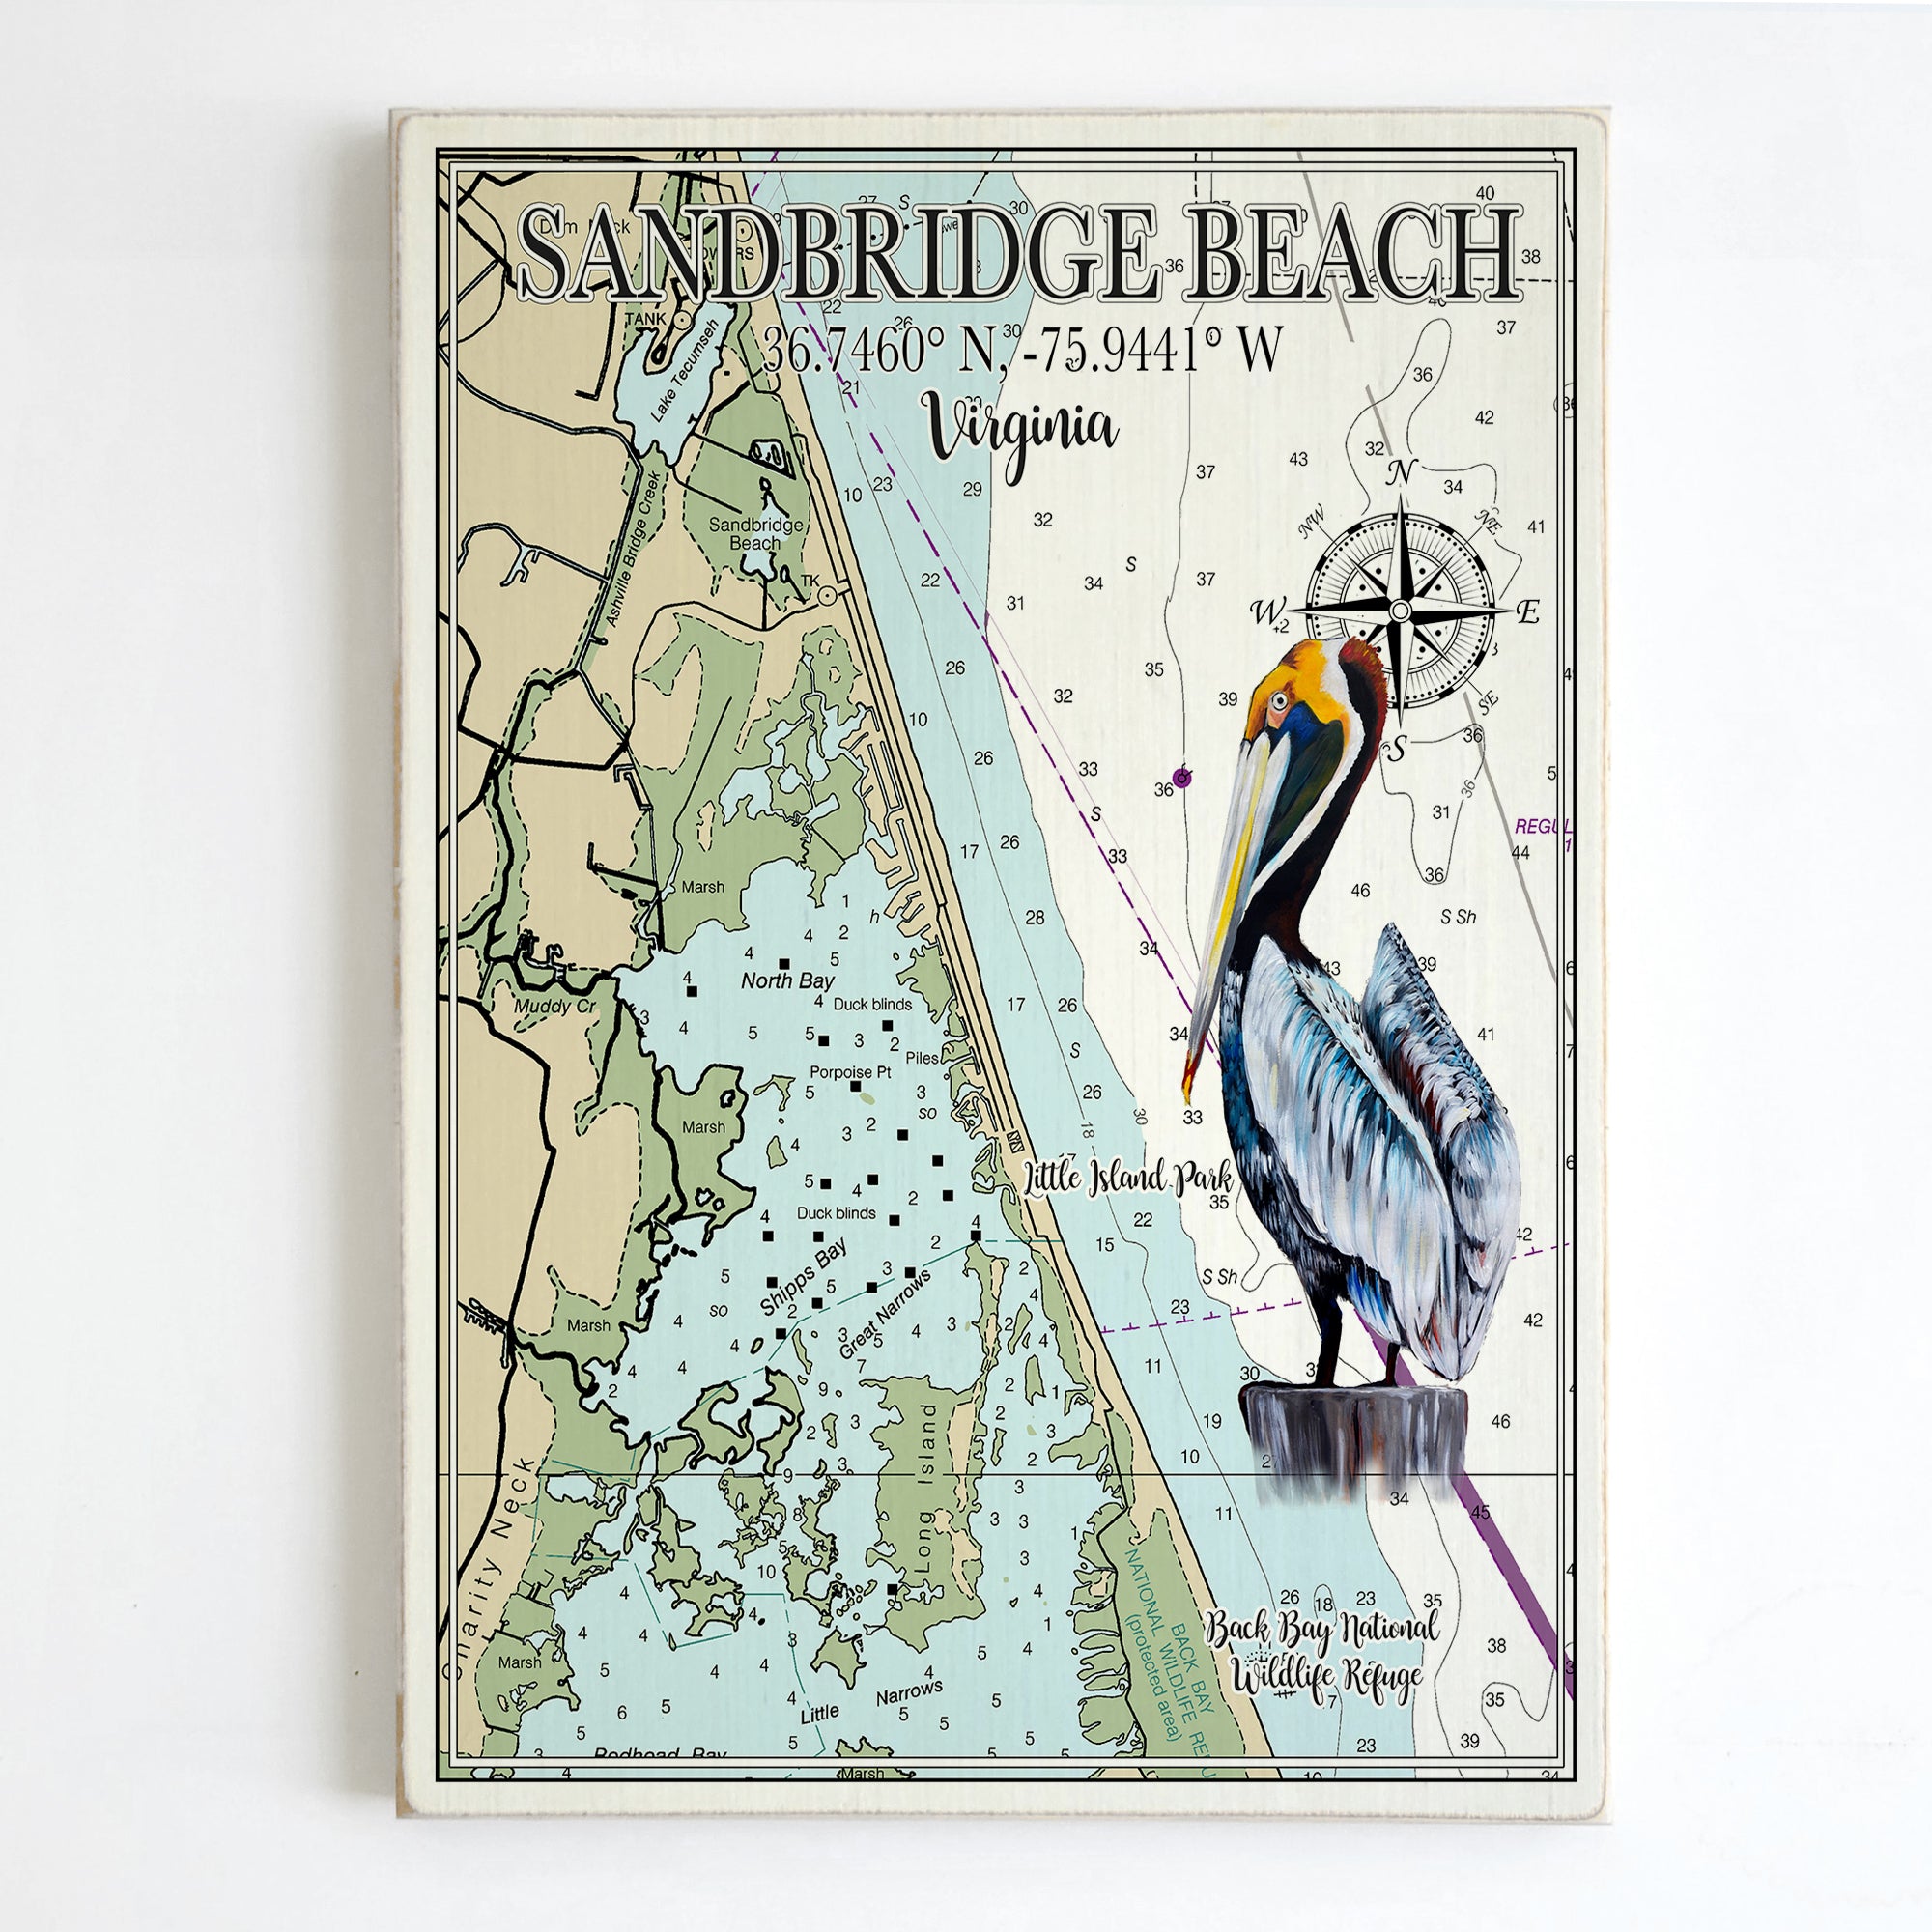 Sandbridge Beach, VA  Pelican Plank Map